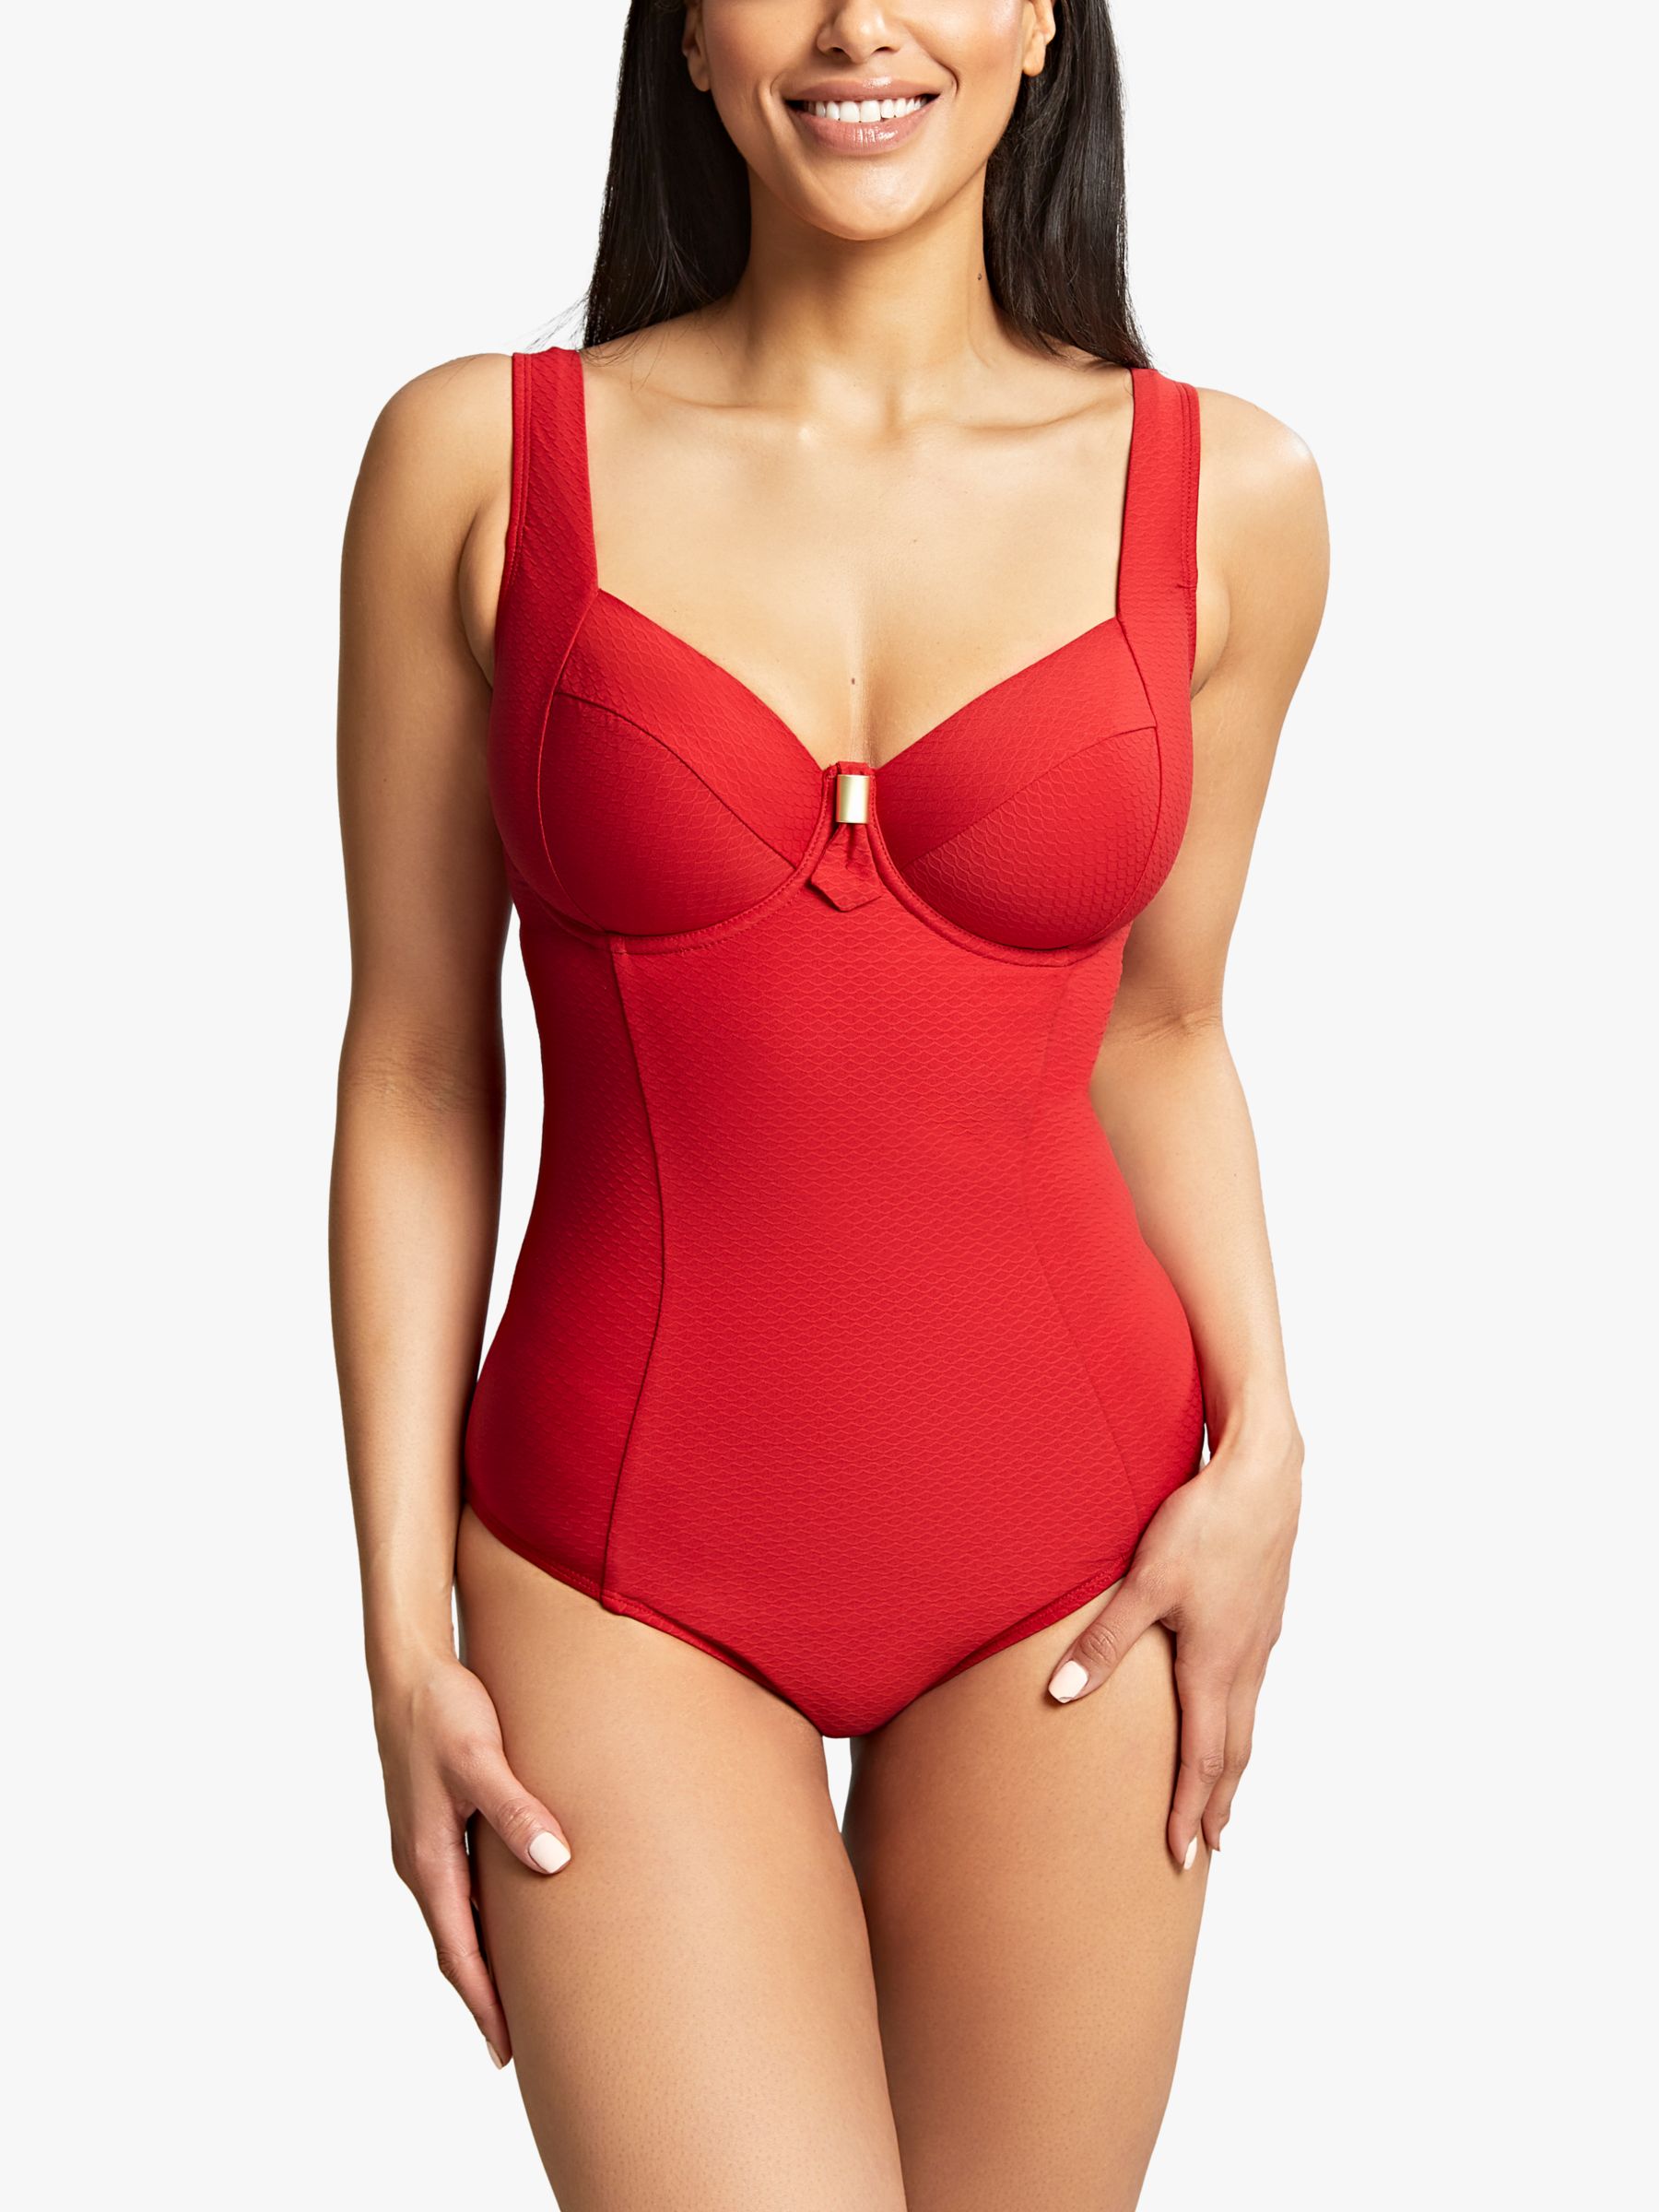 Panache Marianna Balconette Swimsuit, Crimson, 30G